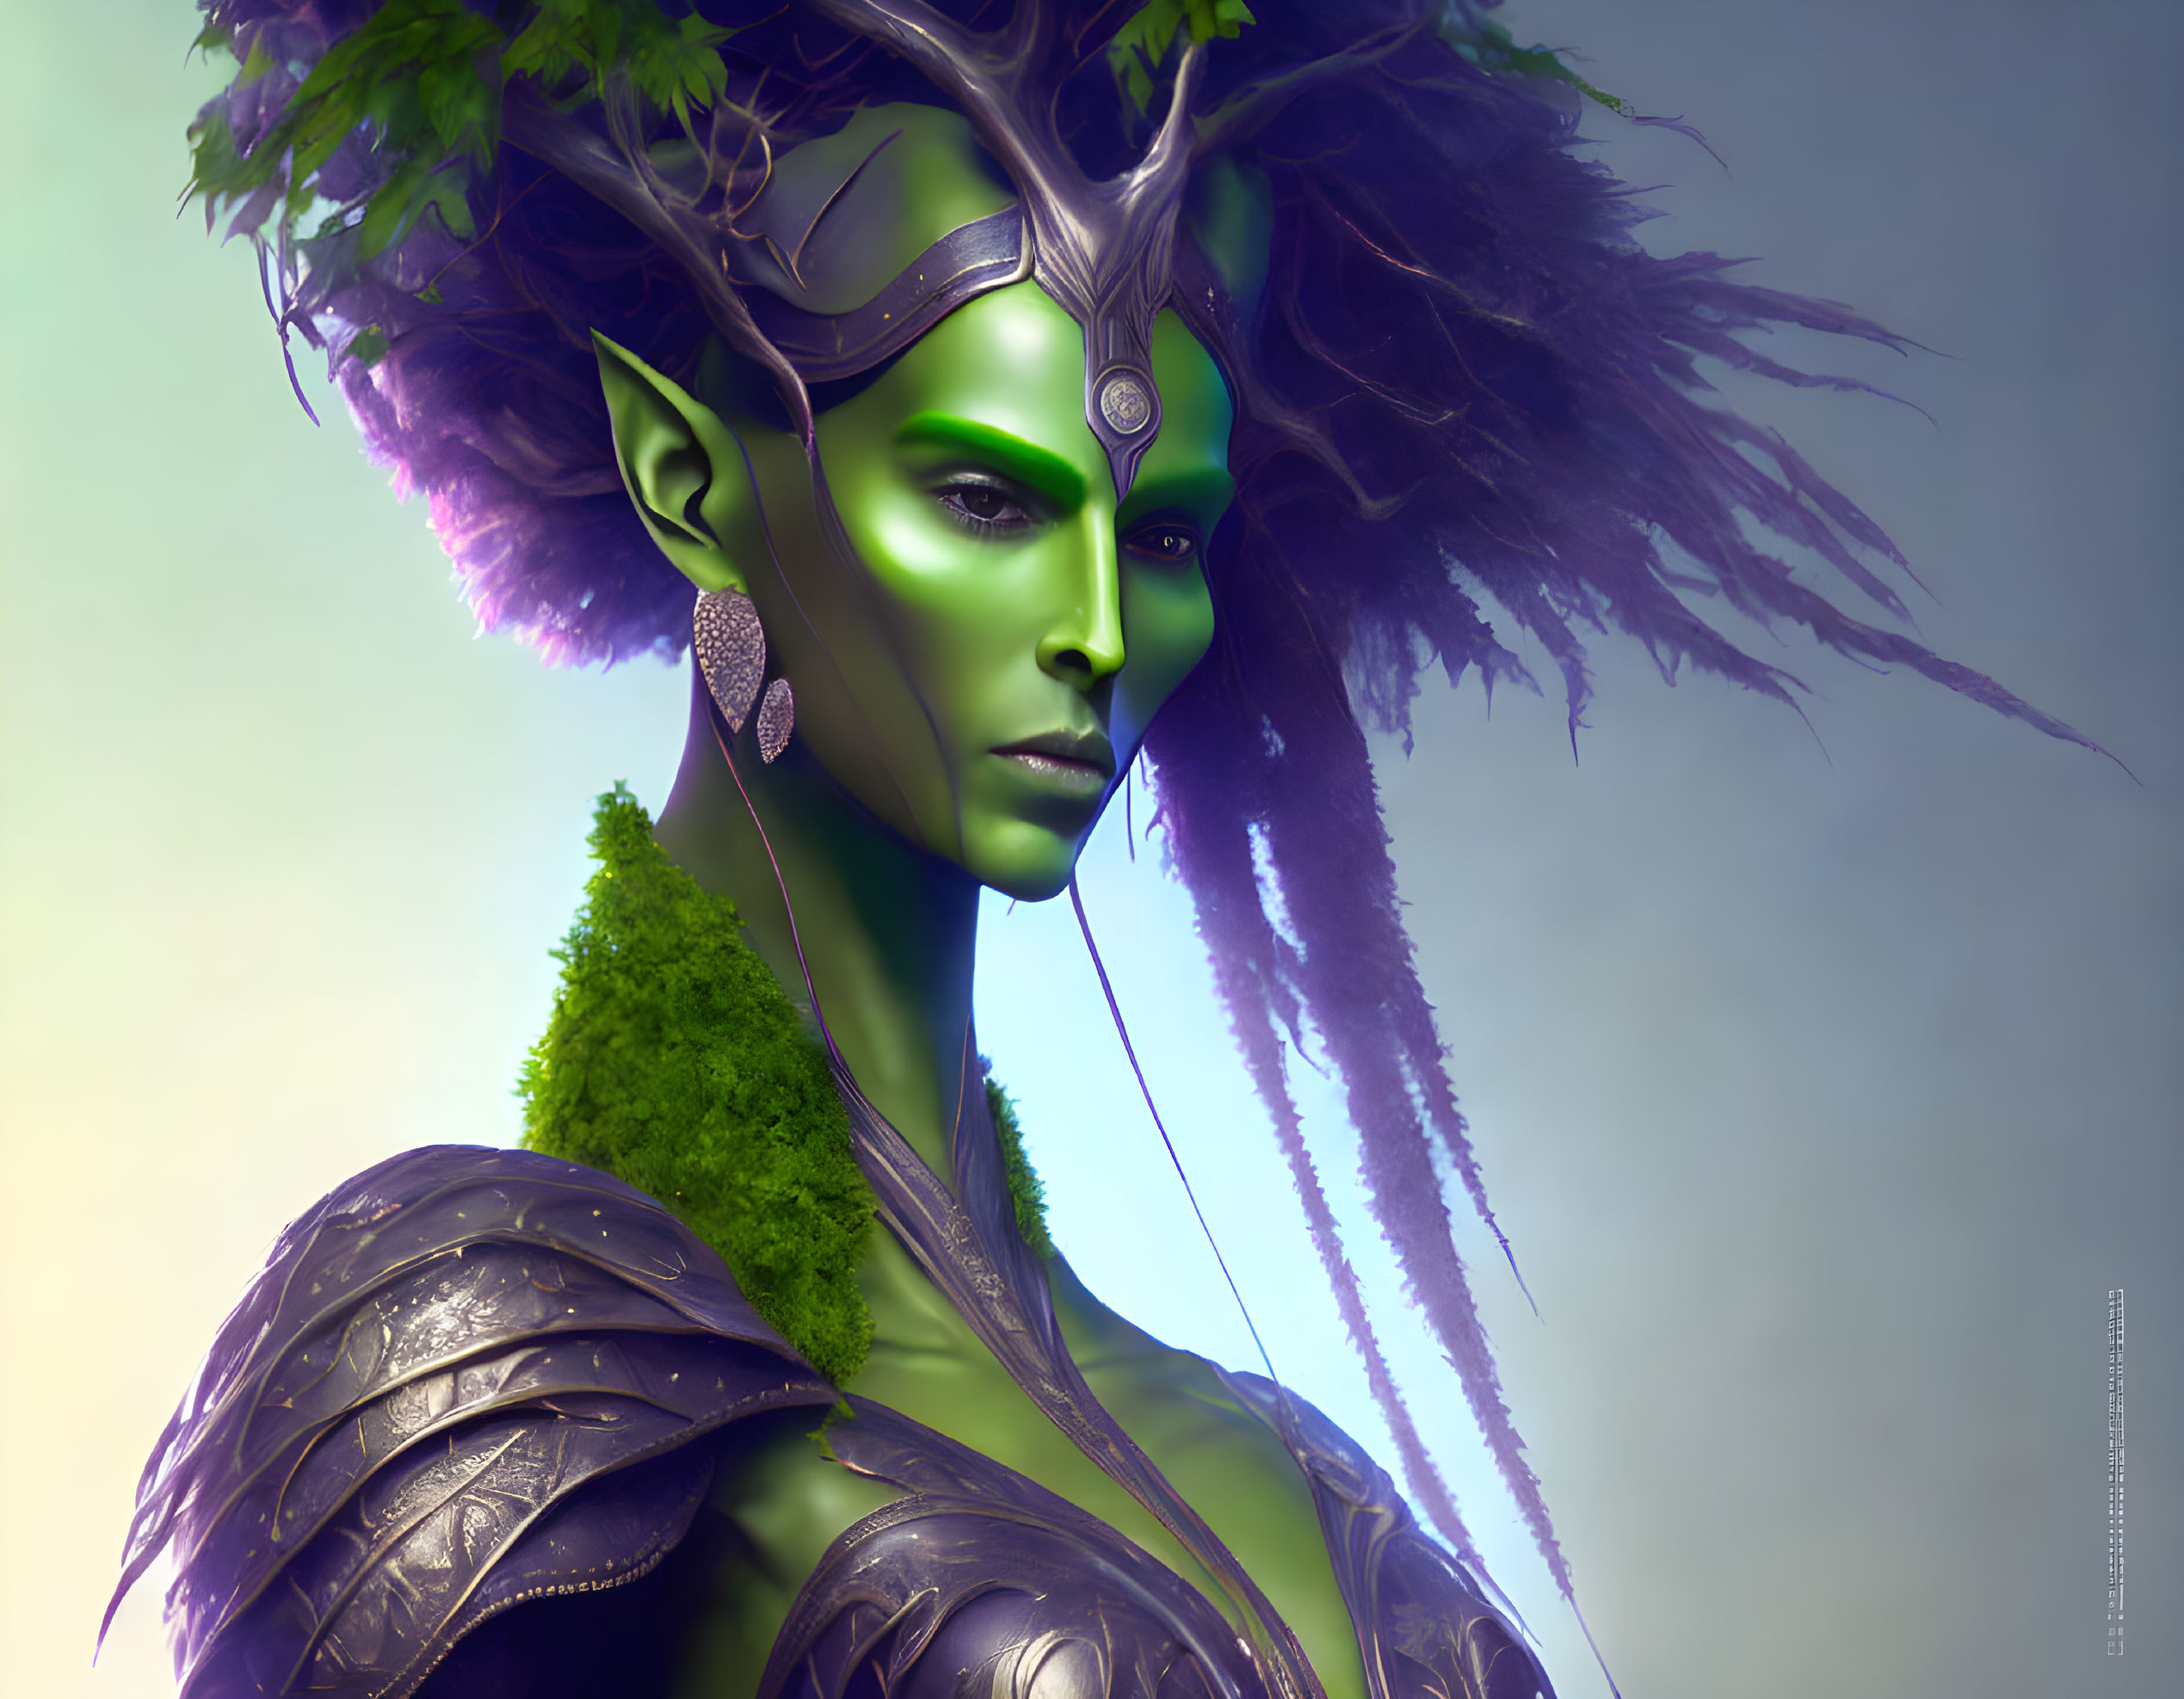 Fantasy illustration of green-skinned elf with ornate headgear